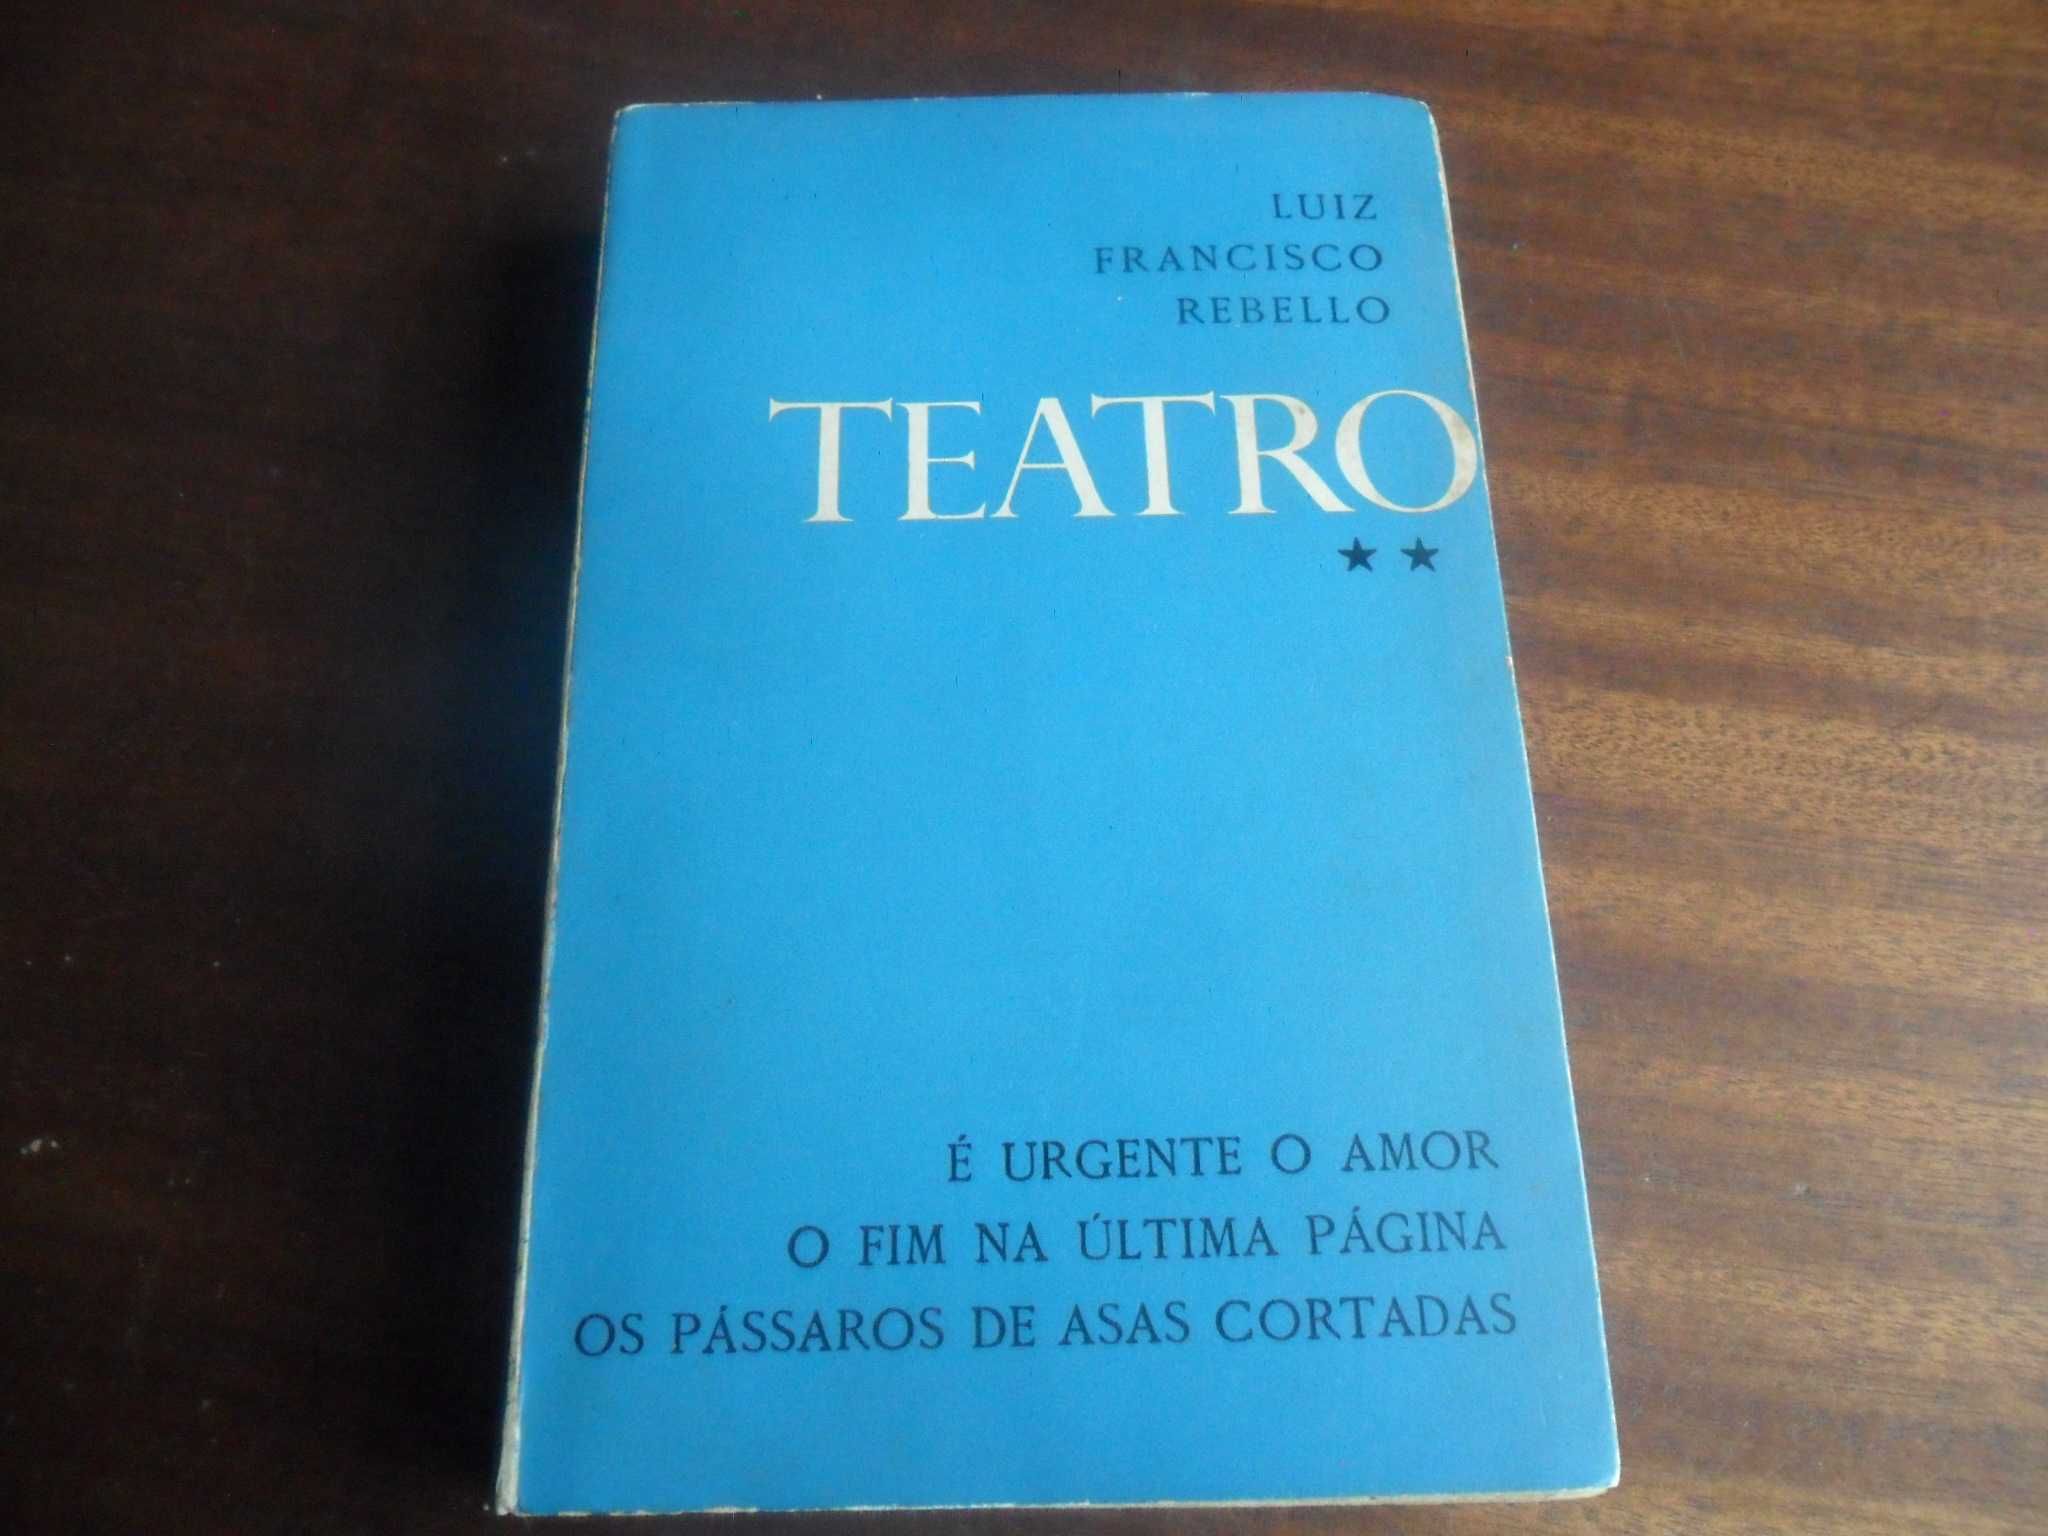 "Teatro" - Volumes 1 e 2 de Luiz Francisco Rebello - 1ª Edição de 1959